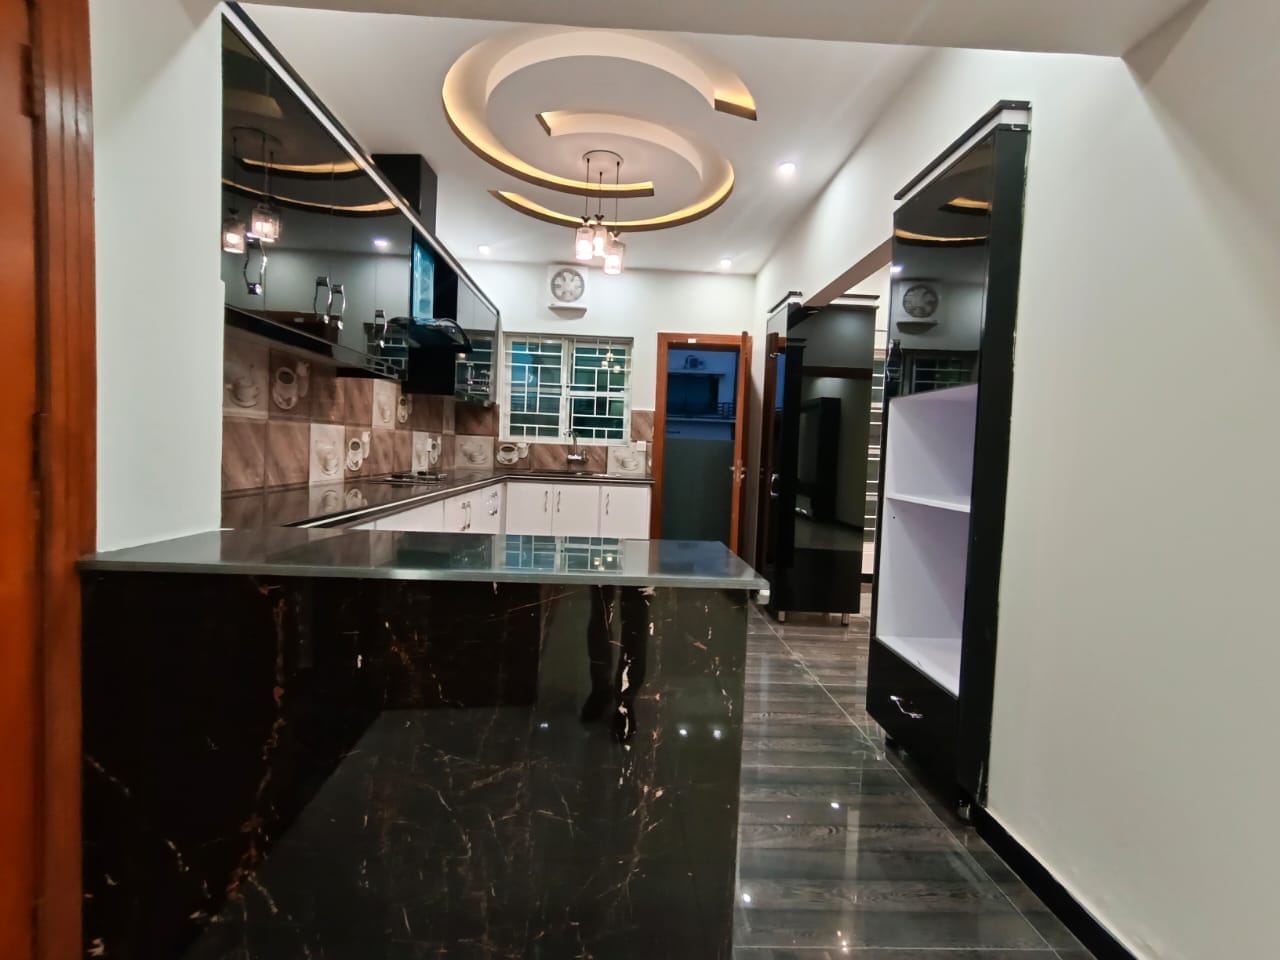 14 Marla House For Sale 𝔹𝕒𝕙𝕣𝕚𝕒 𝕋𝕠𝕨𝕟 Rawalpindi